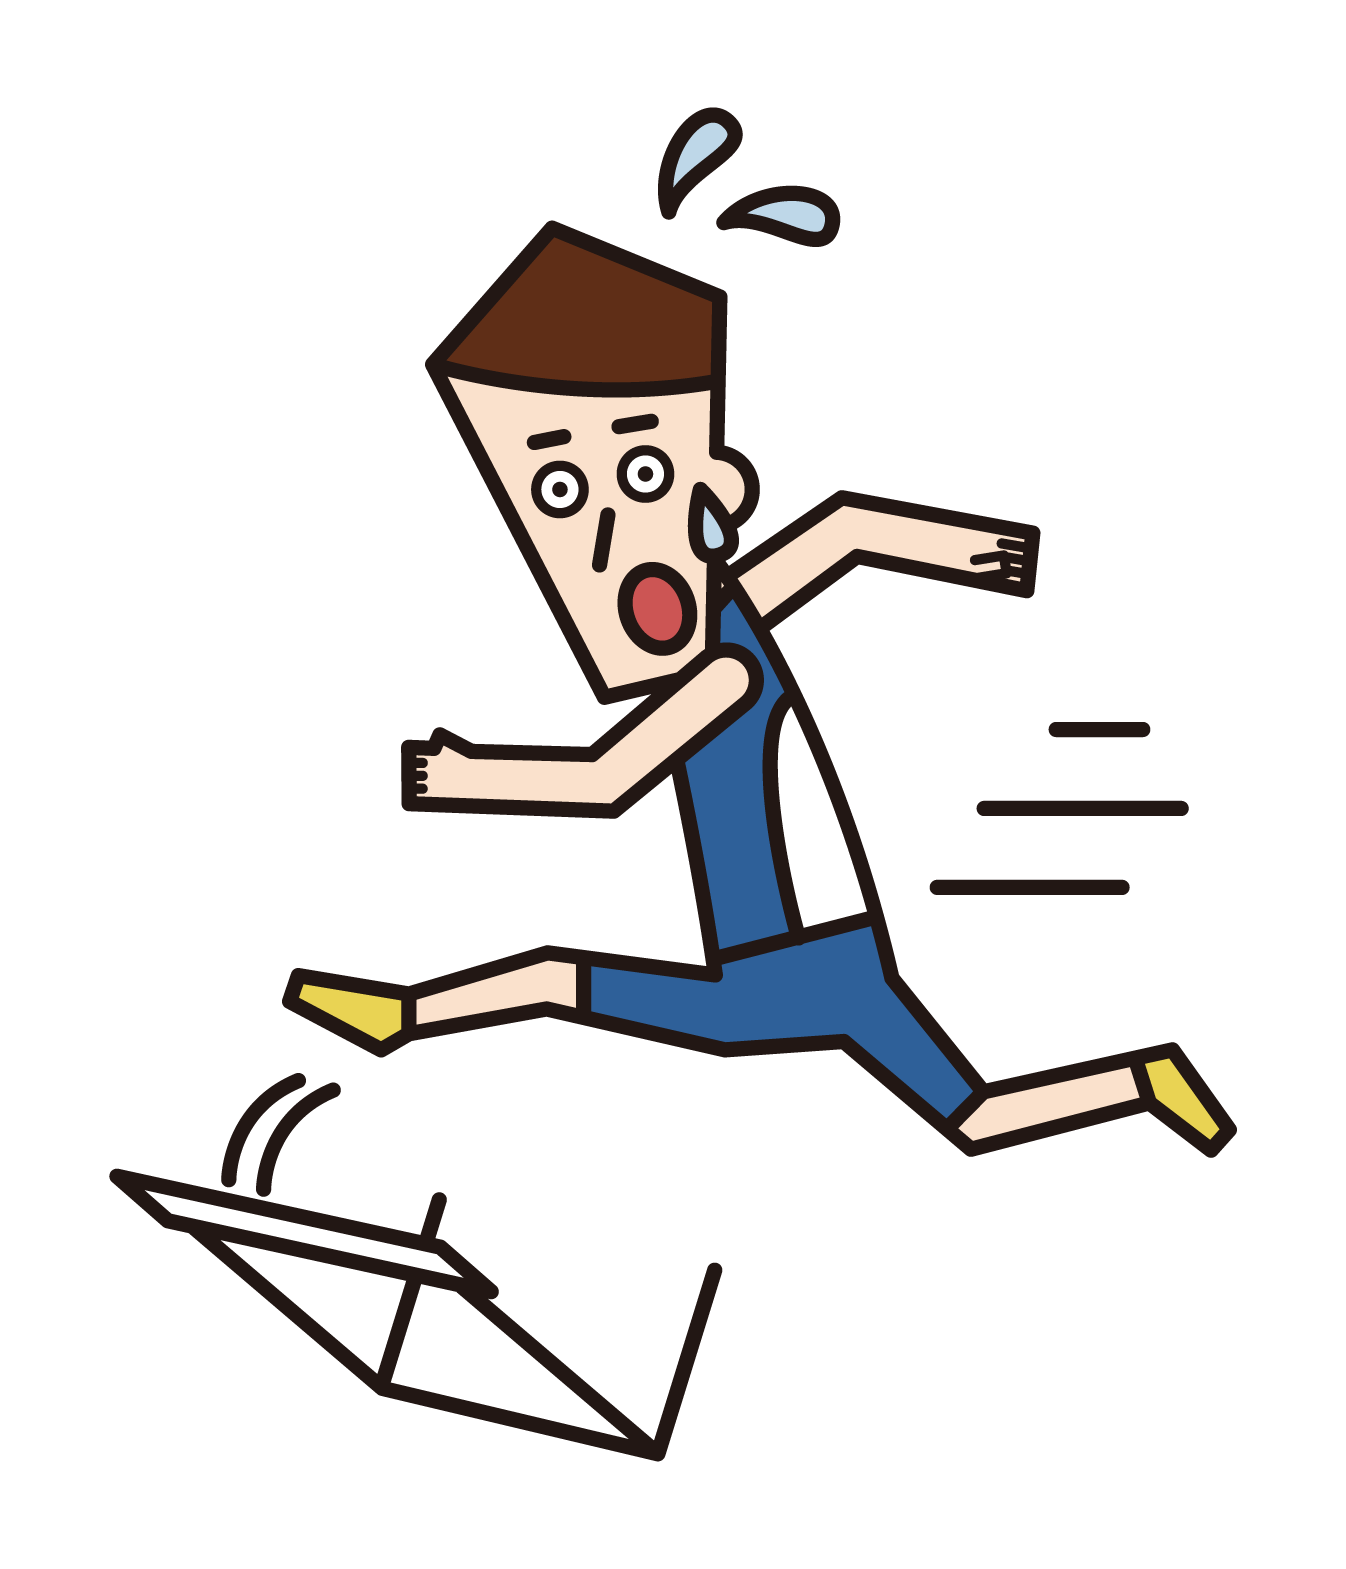 Illustration of a man who defeats a hurdle in a hurdle run